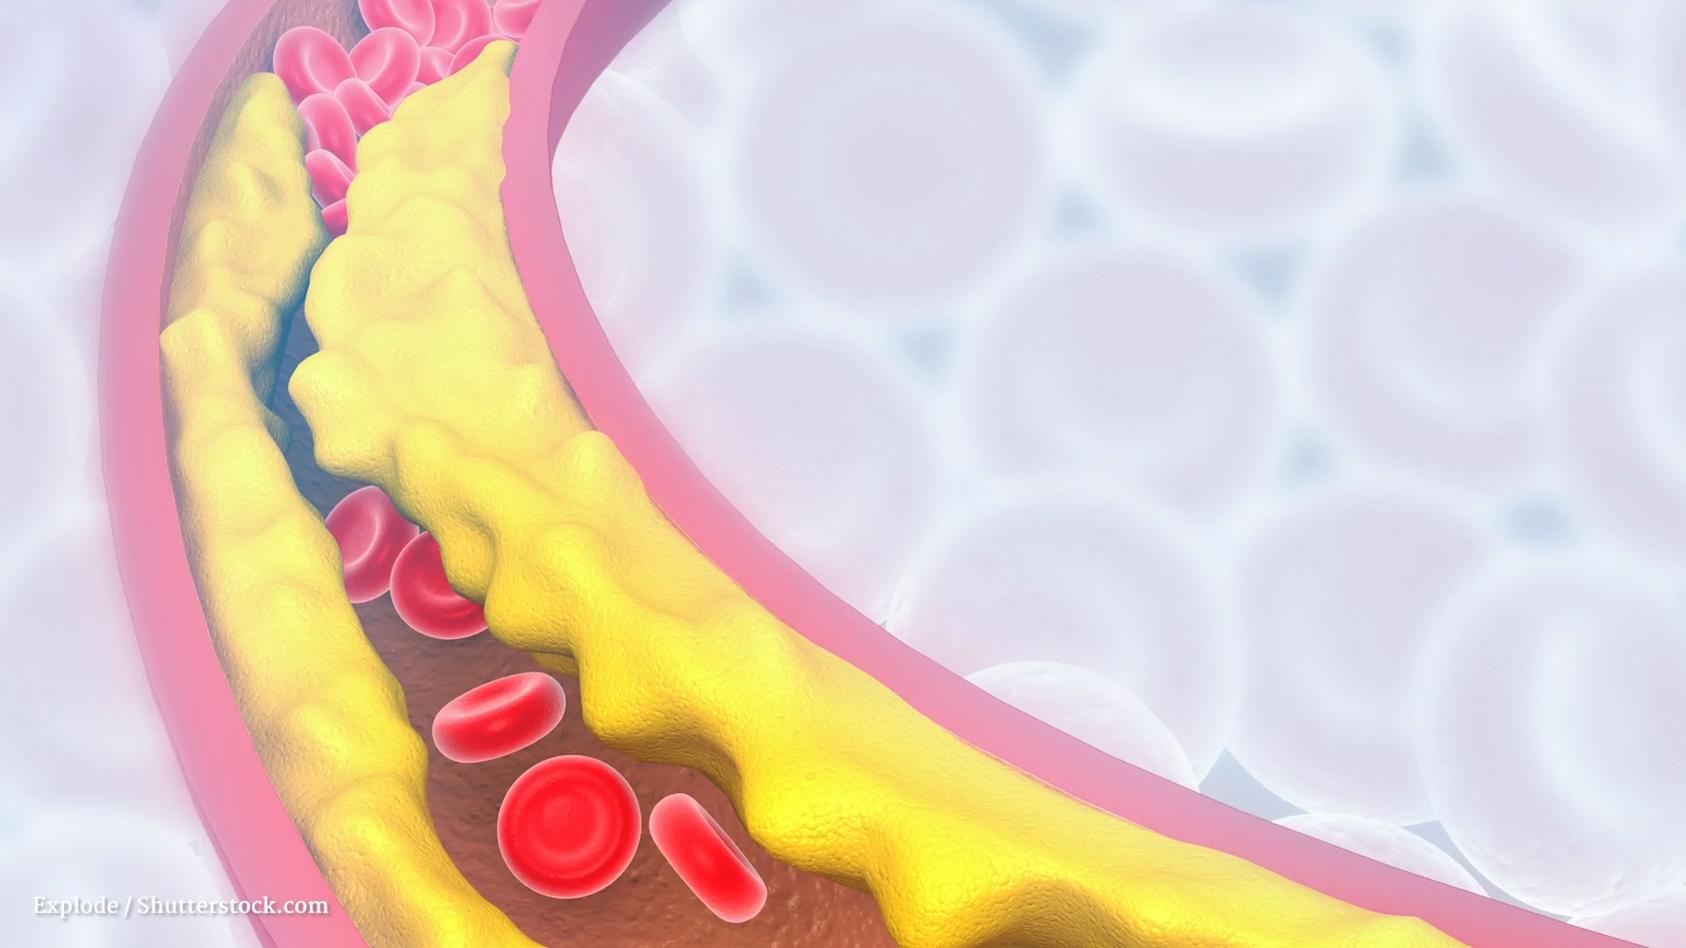 Was löst Hypercholesterinämie aus? Erhöhter Cholesterinspiegel